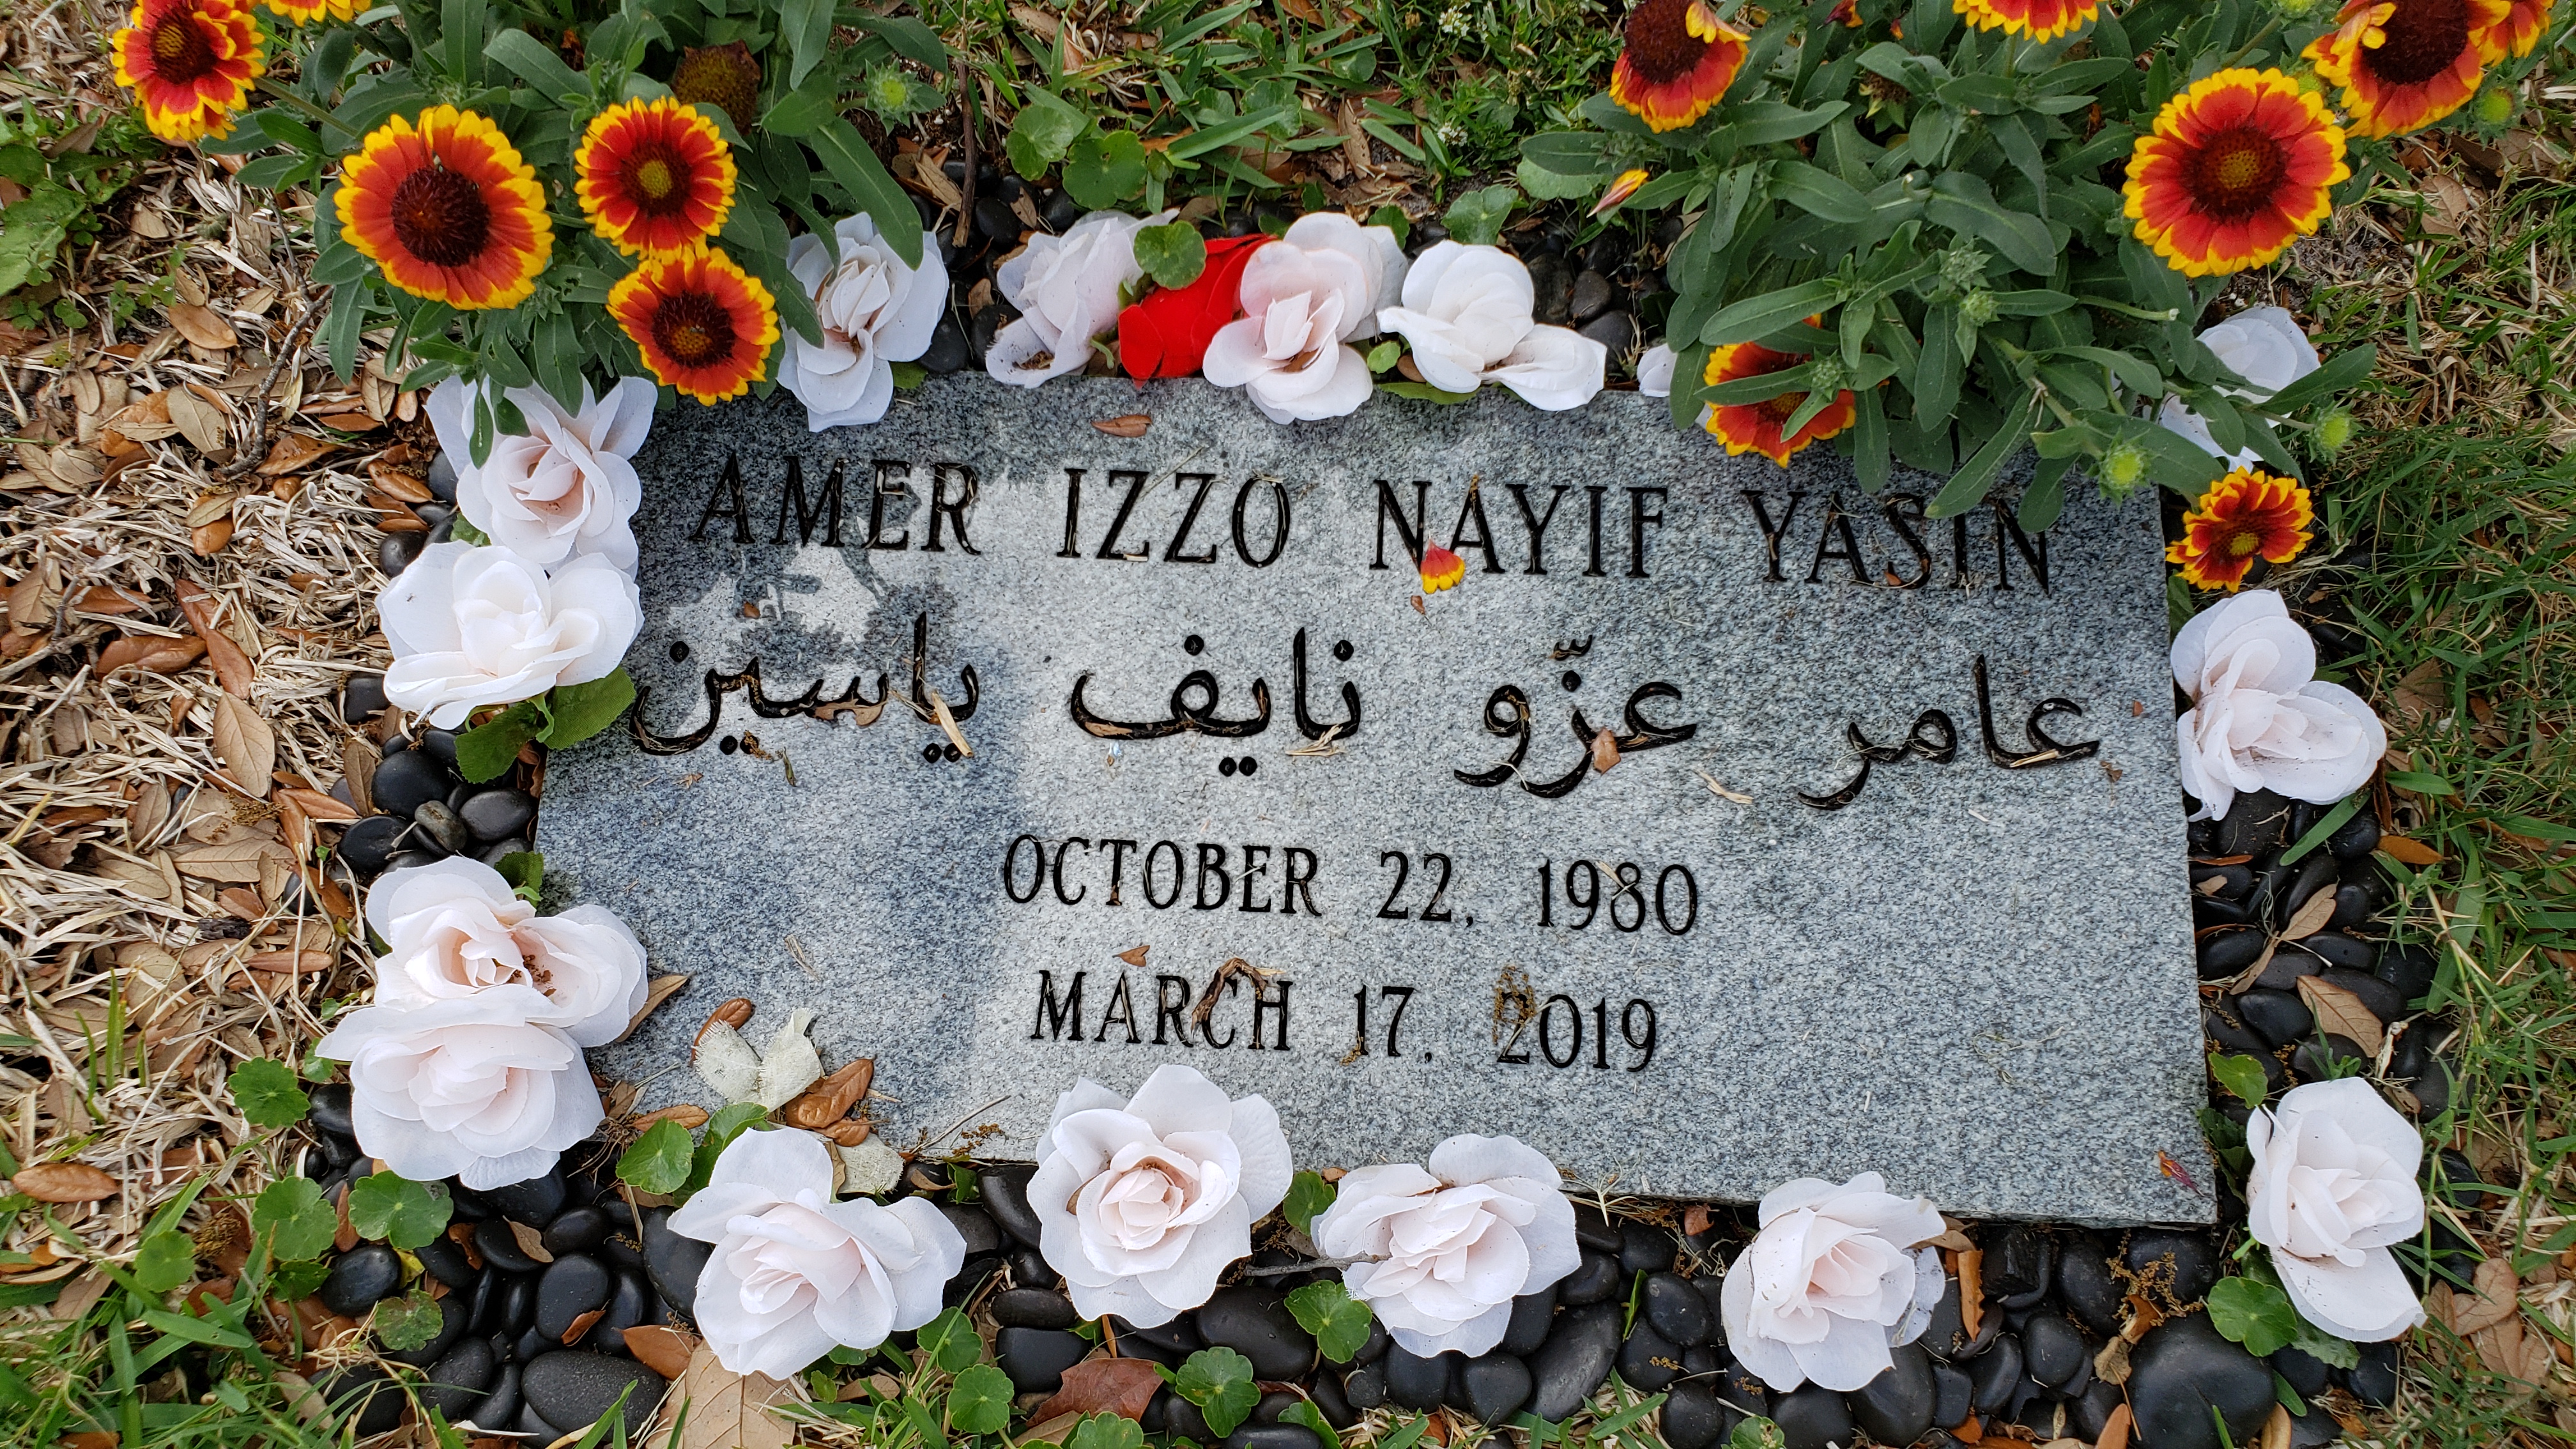 Amer Izzo Nayif Yasin